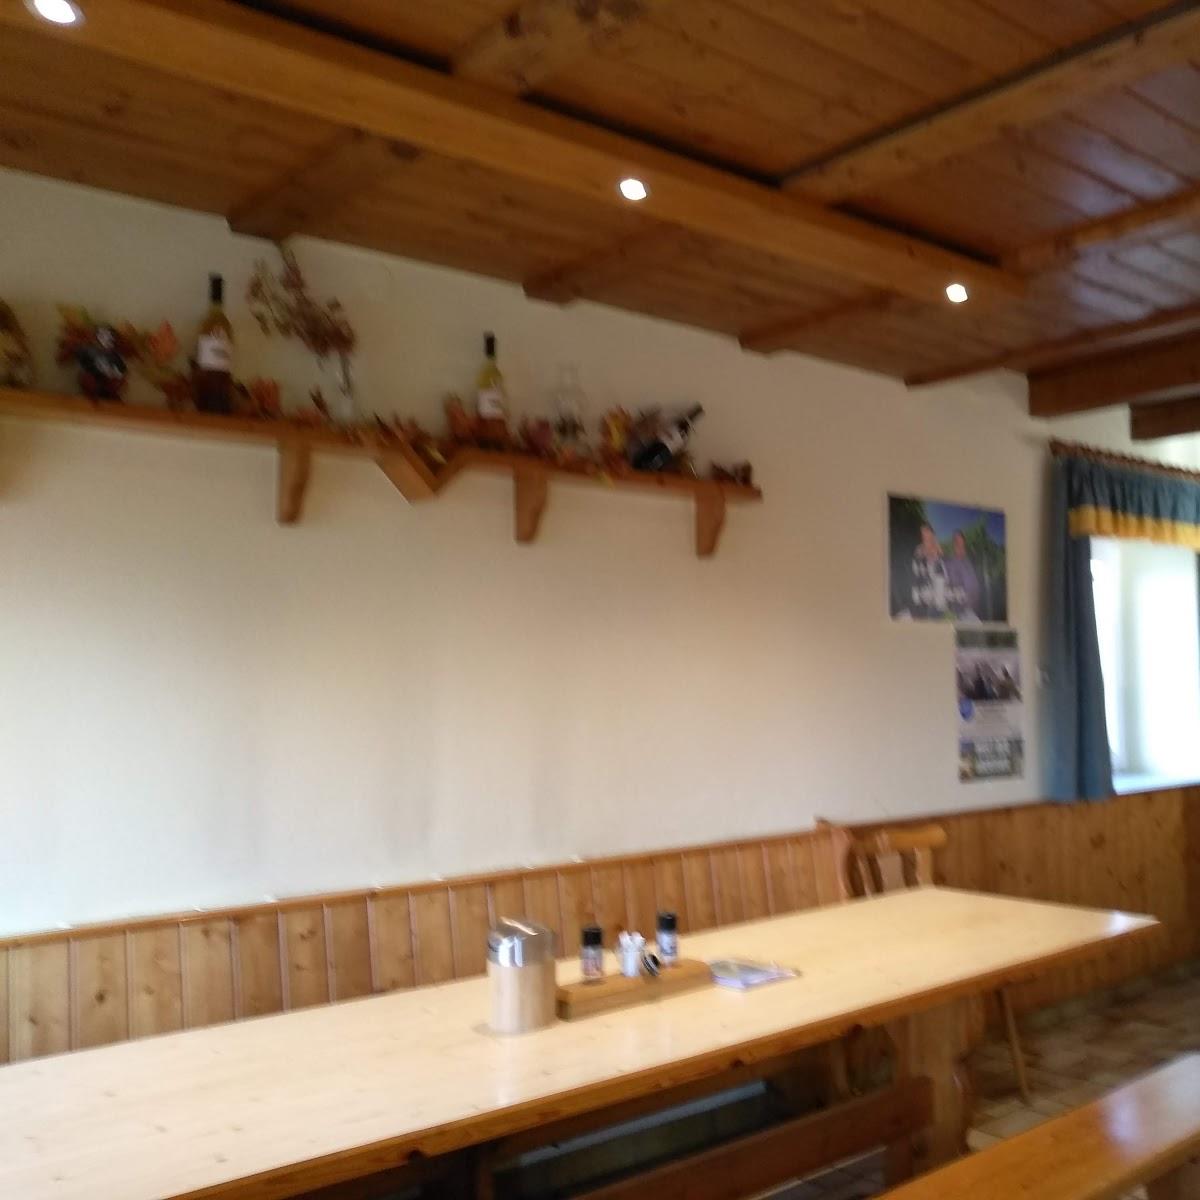 Restaurant "Petz Erwin" in Hartberg